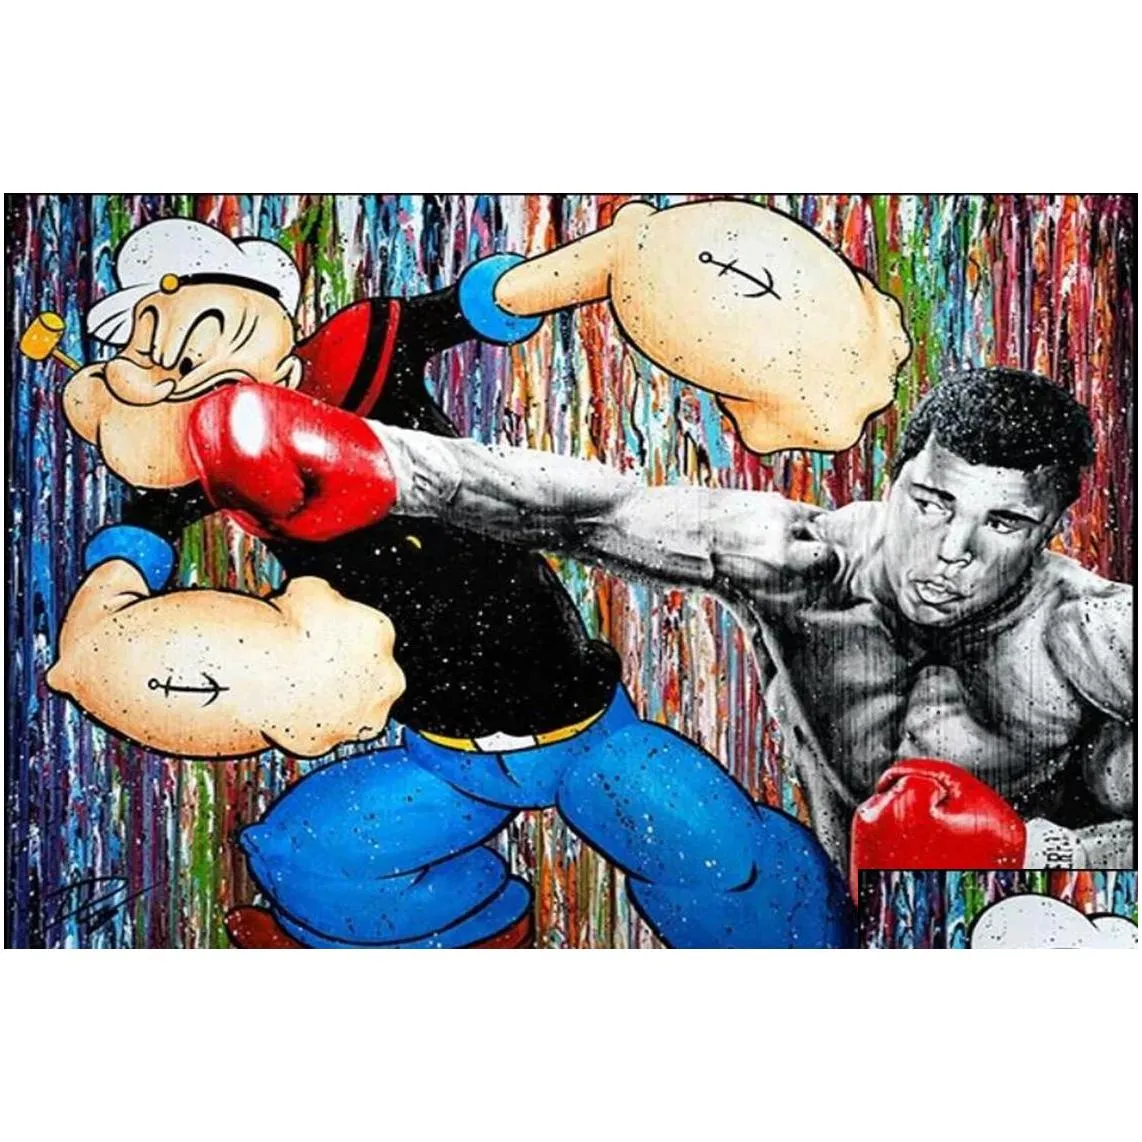 modern graffiti art boxing match art decoration hd quality kindergarten kids children room picture room poster canvas painting